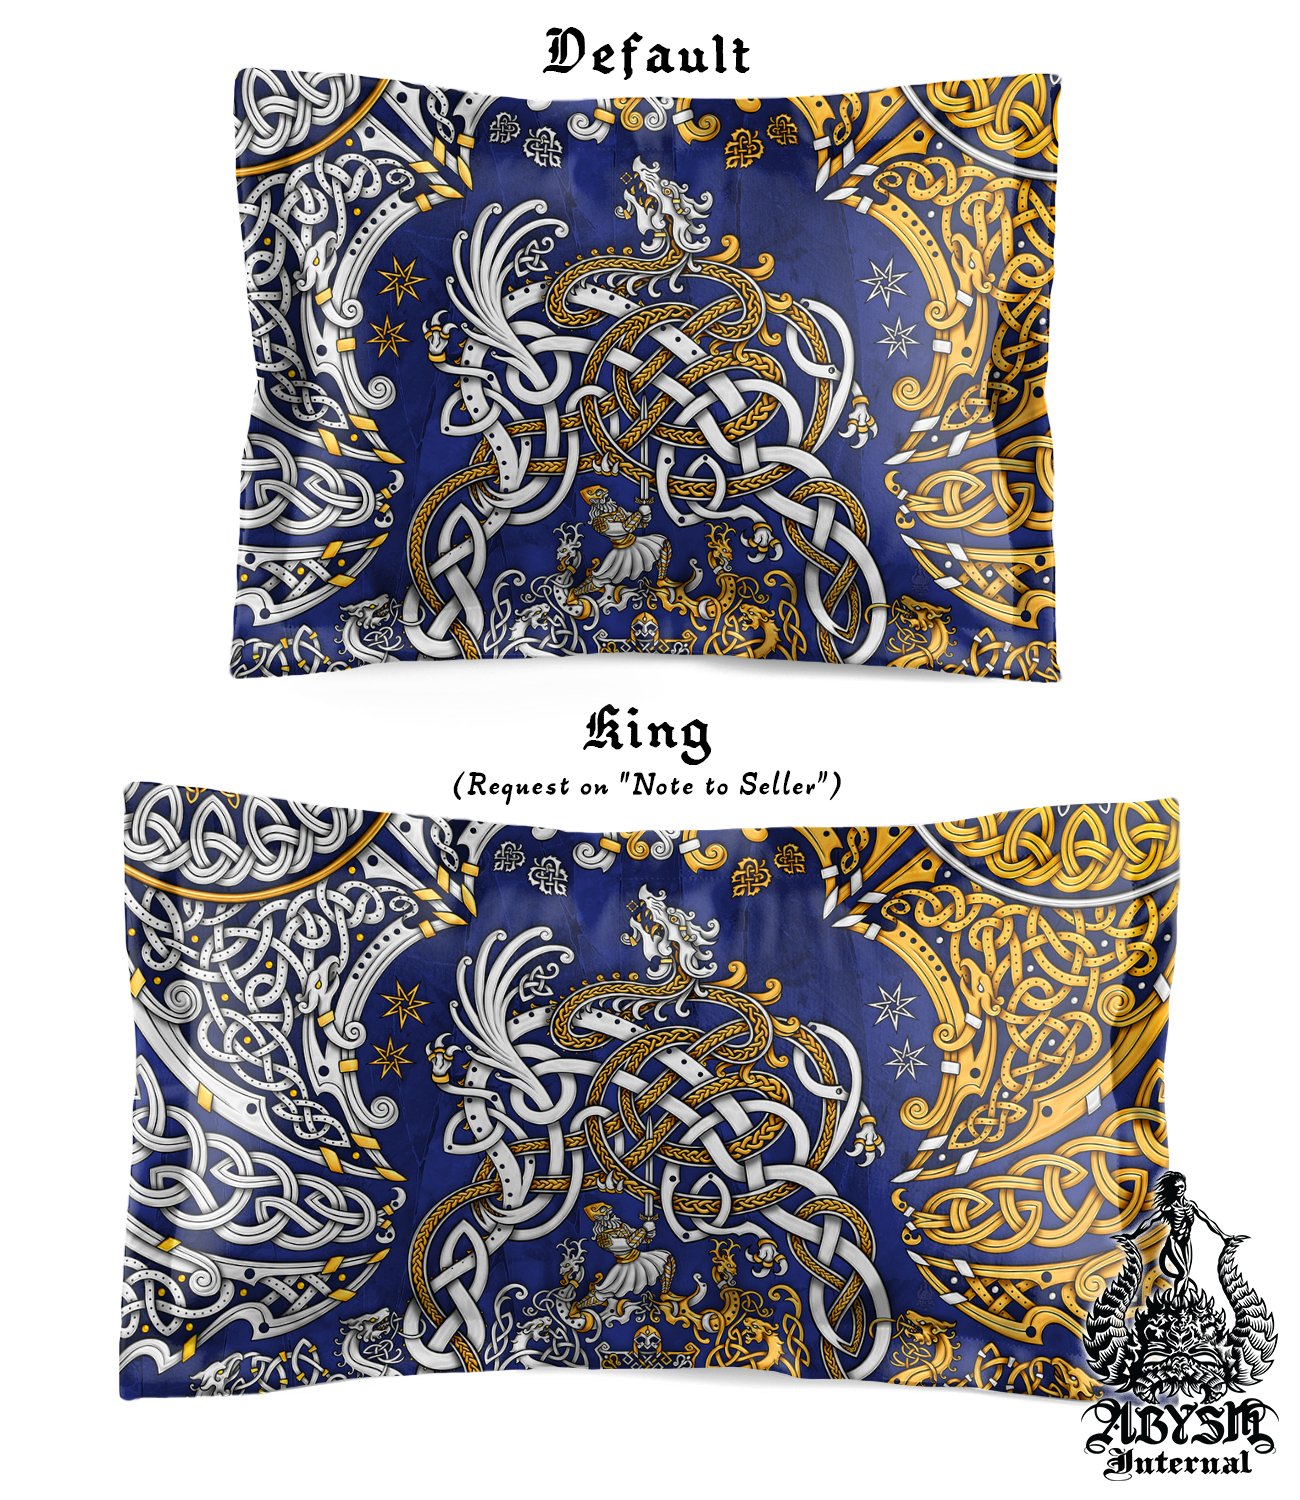 Viking Bedding Set, Comforter or Duvet, Norse Bed Cover and Bedroom Decor, Sigurd kills Dragon Fafnir, King, Queen & Twin Size - Gold 3 Colors: Black, Red, Blue - Abysm Internal